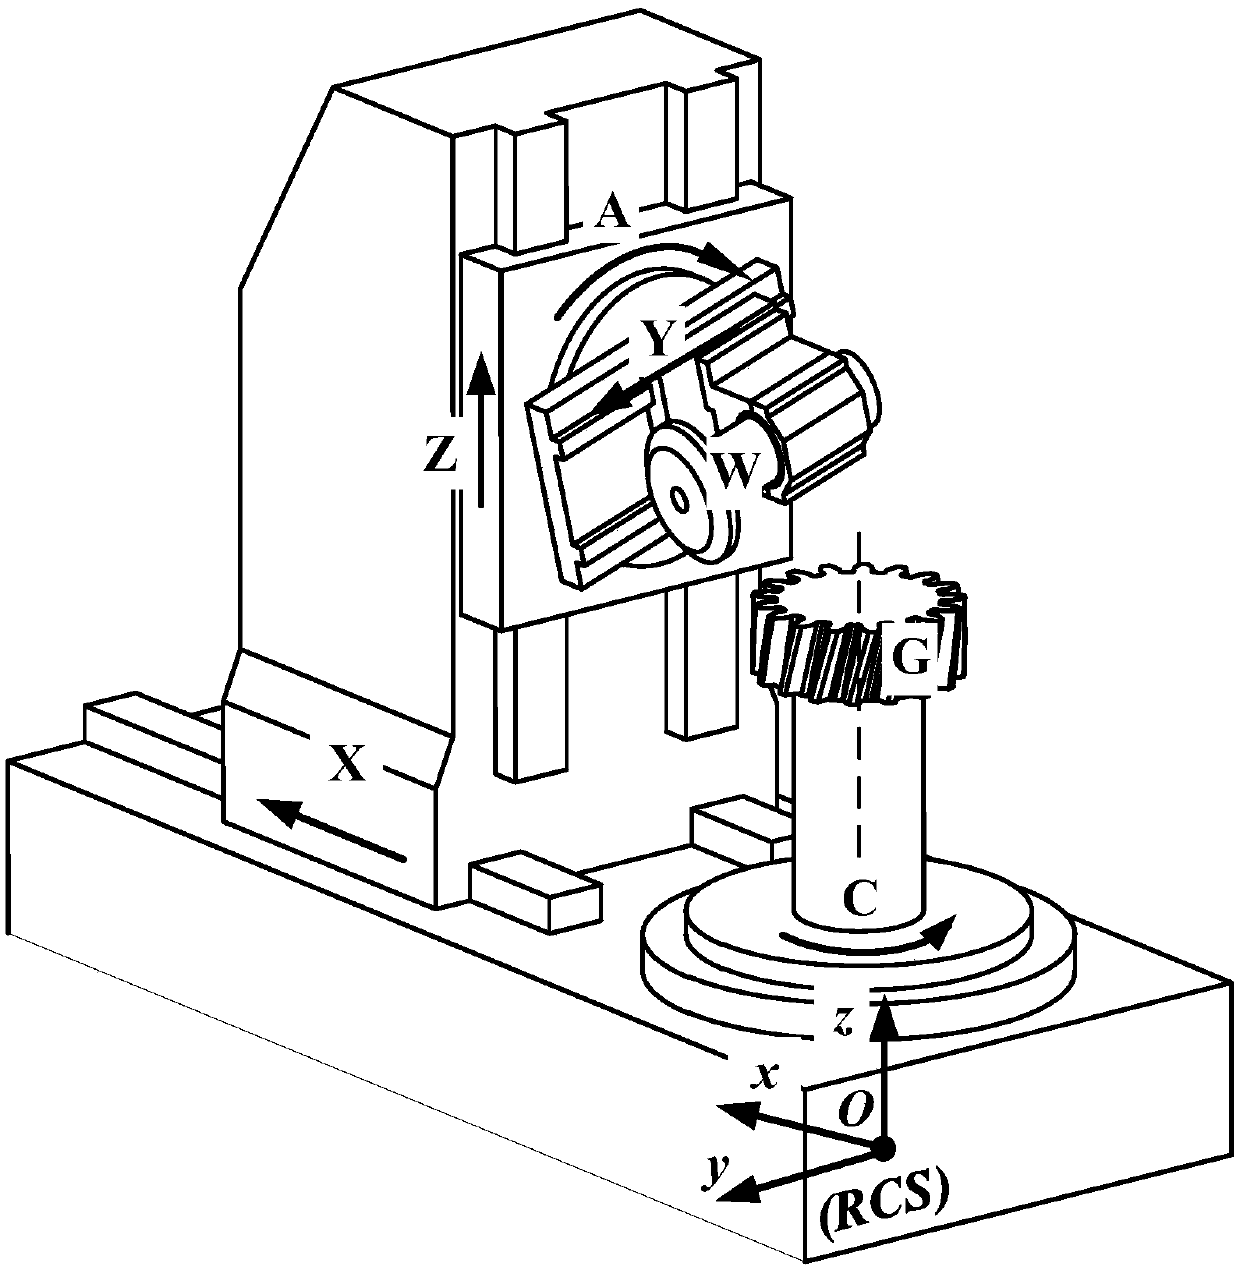 Screening method for key geometric errors of forming gear grinding machine based on gear surface error model